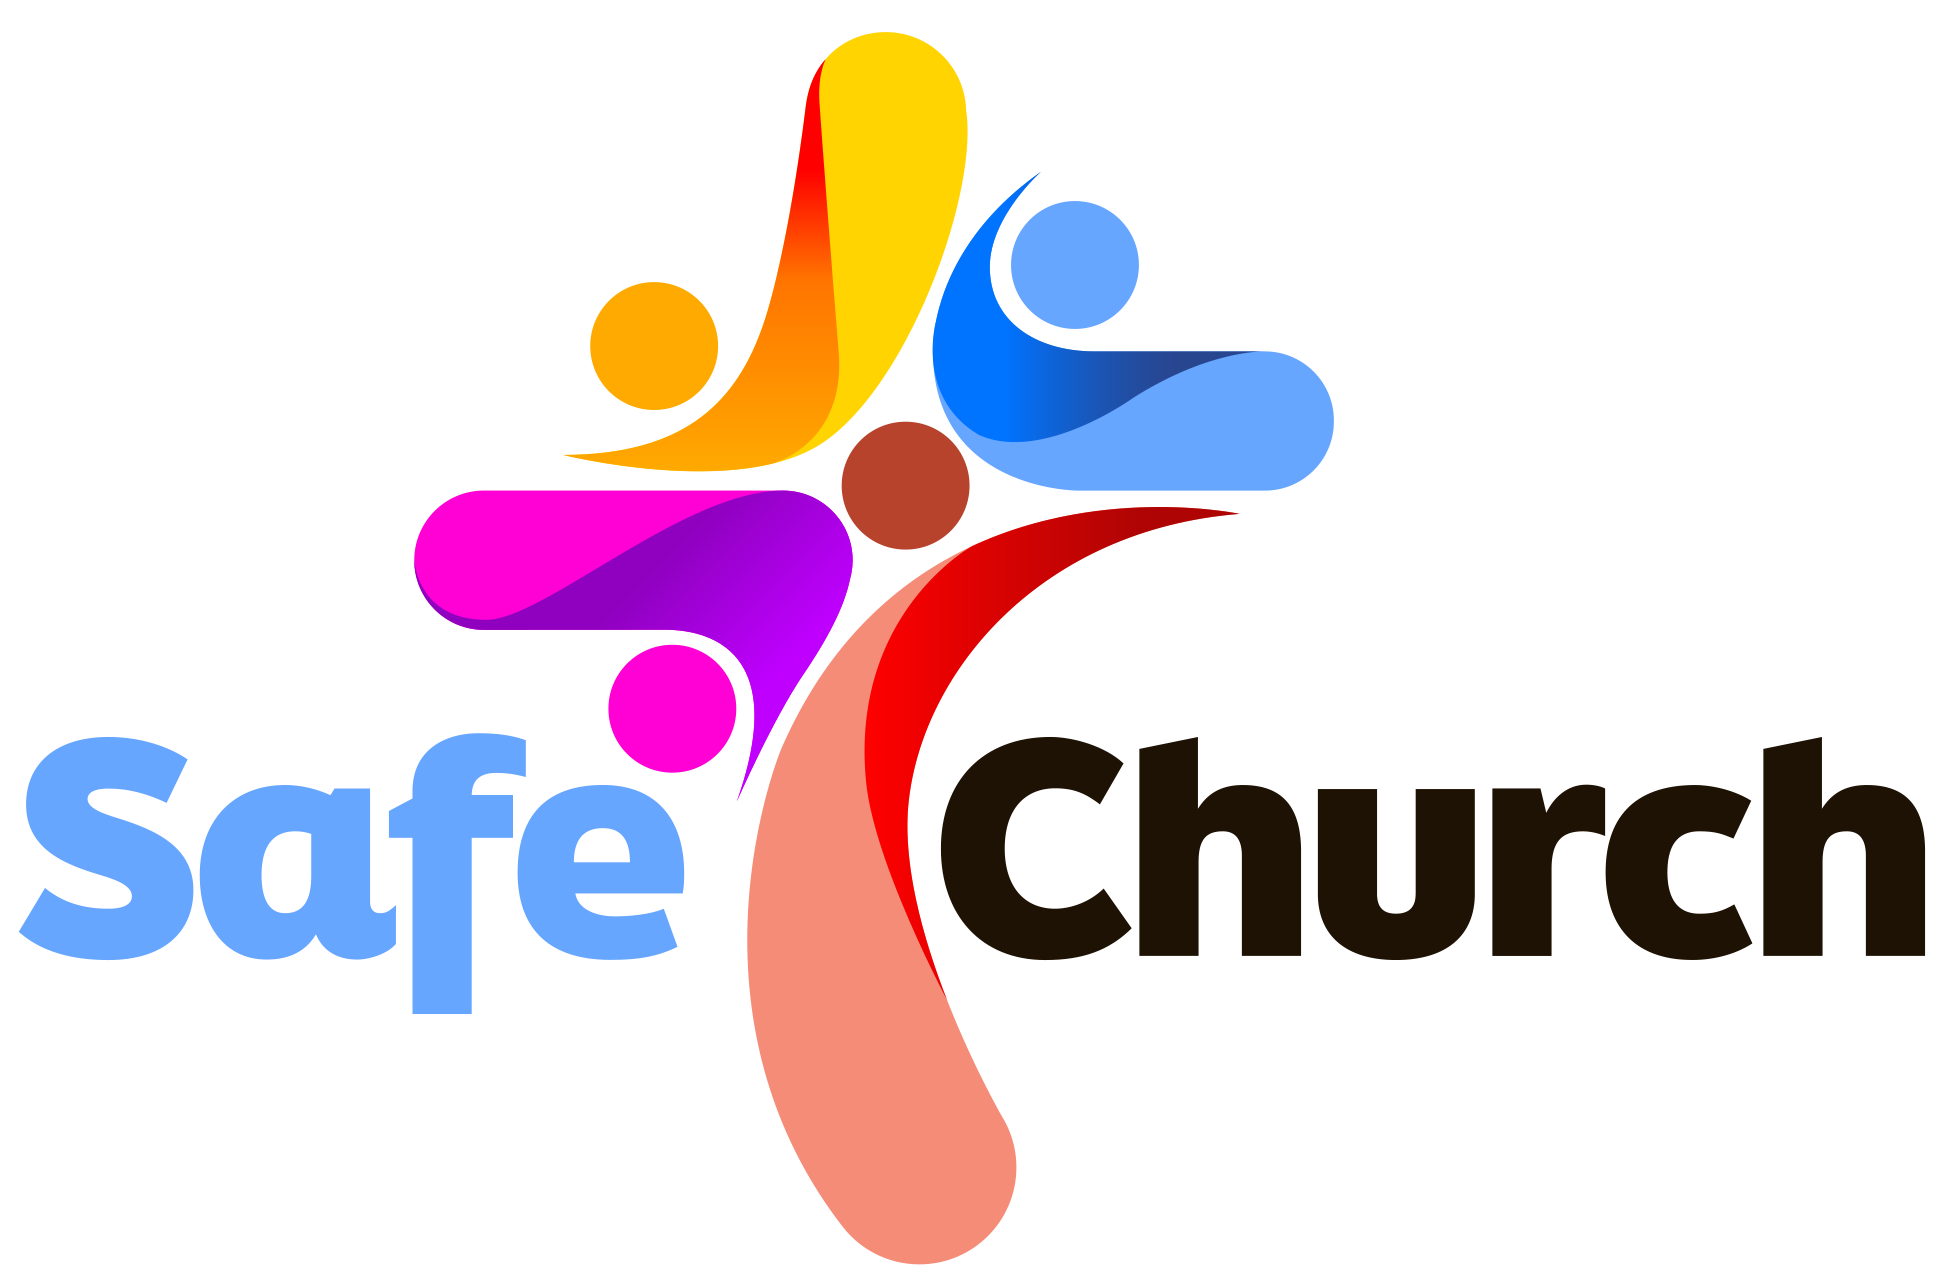 Safe Church logo landscape.